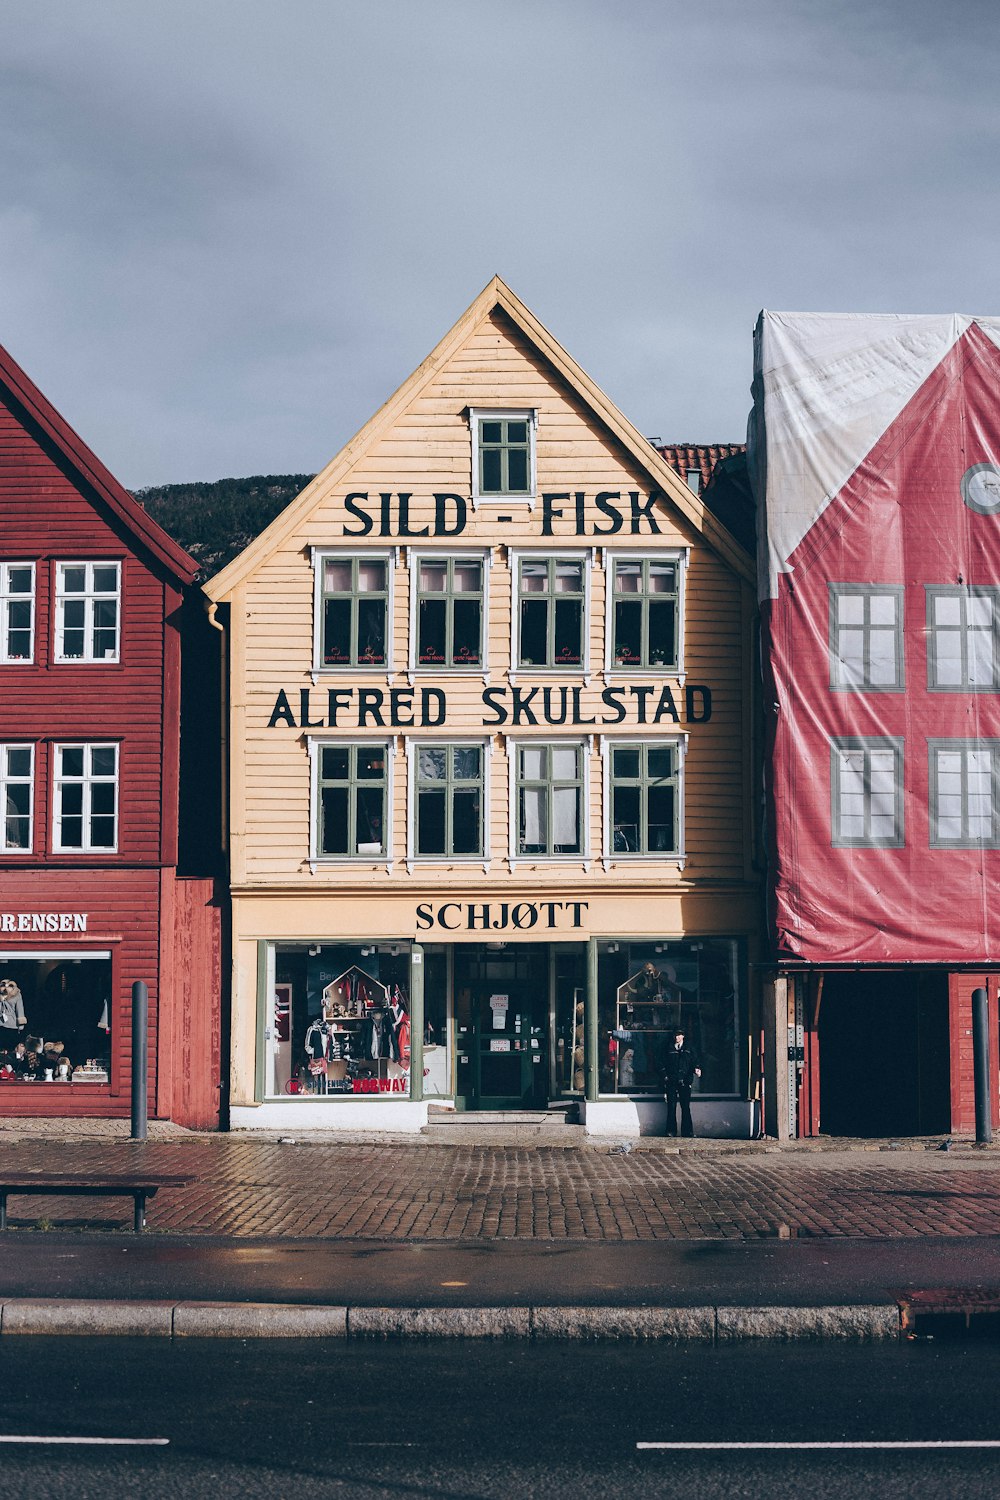 Sild - Fisk Alfred SkulStad house under gray skies